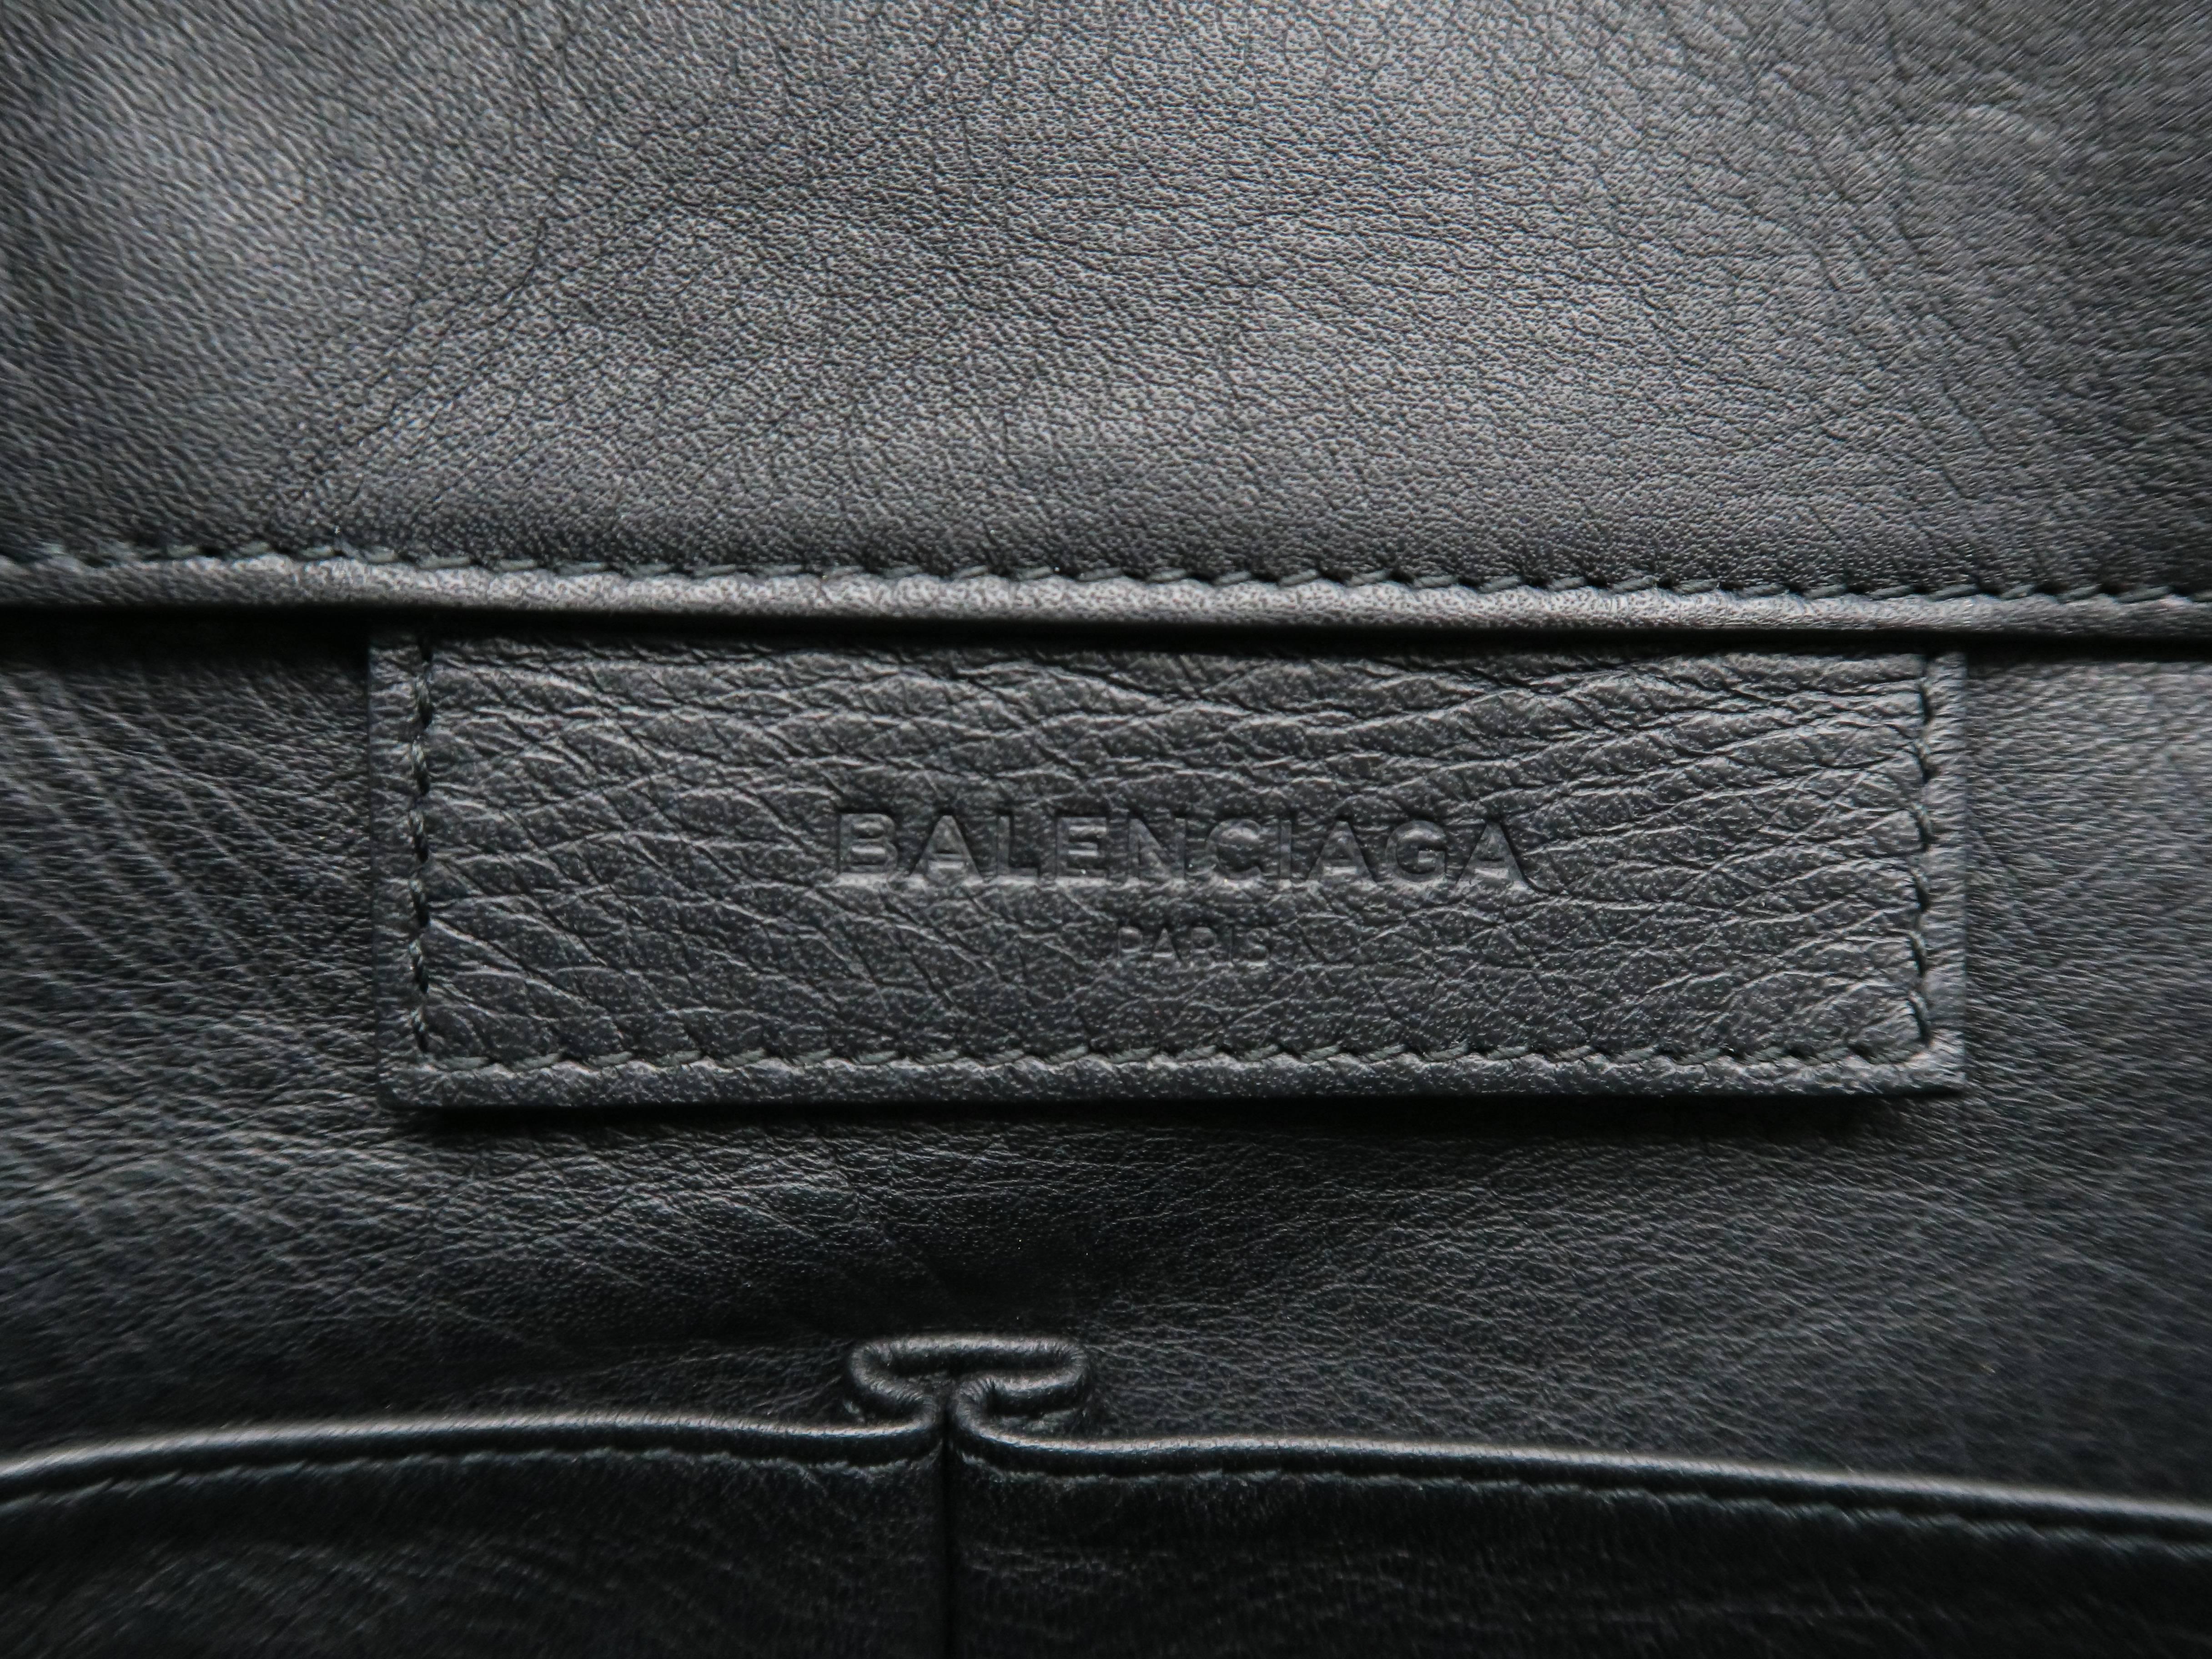 Balenciaga Papier Zip Around Black Calfskin Leather Tote Bag For Sale 4